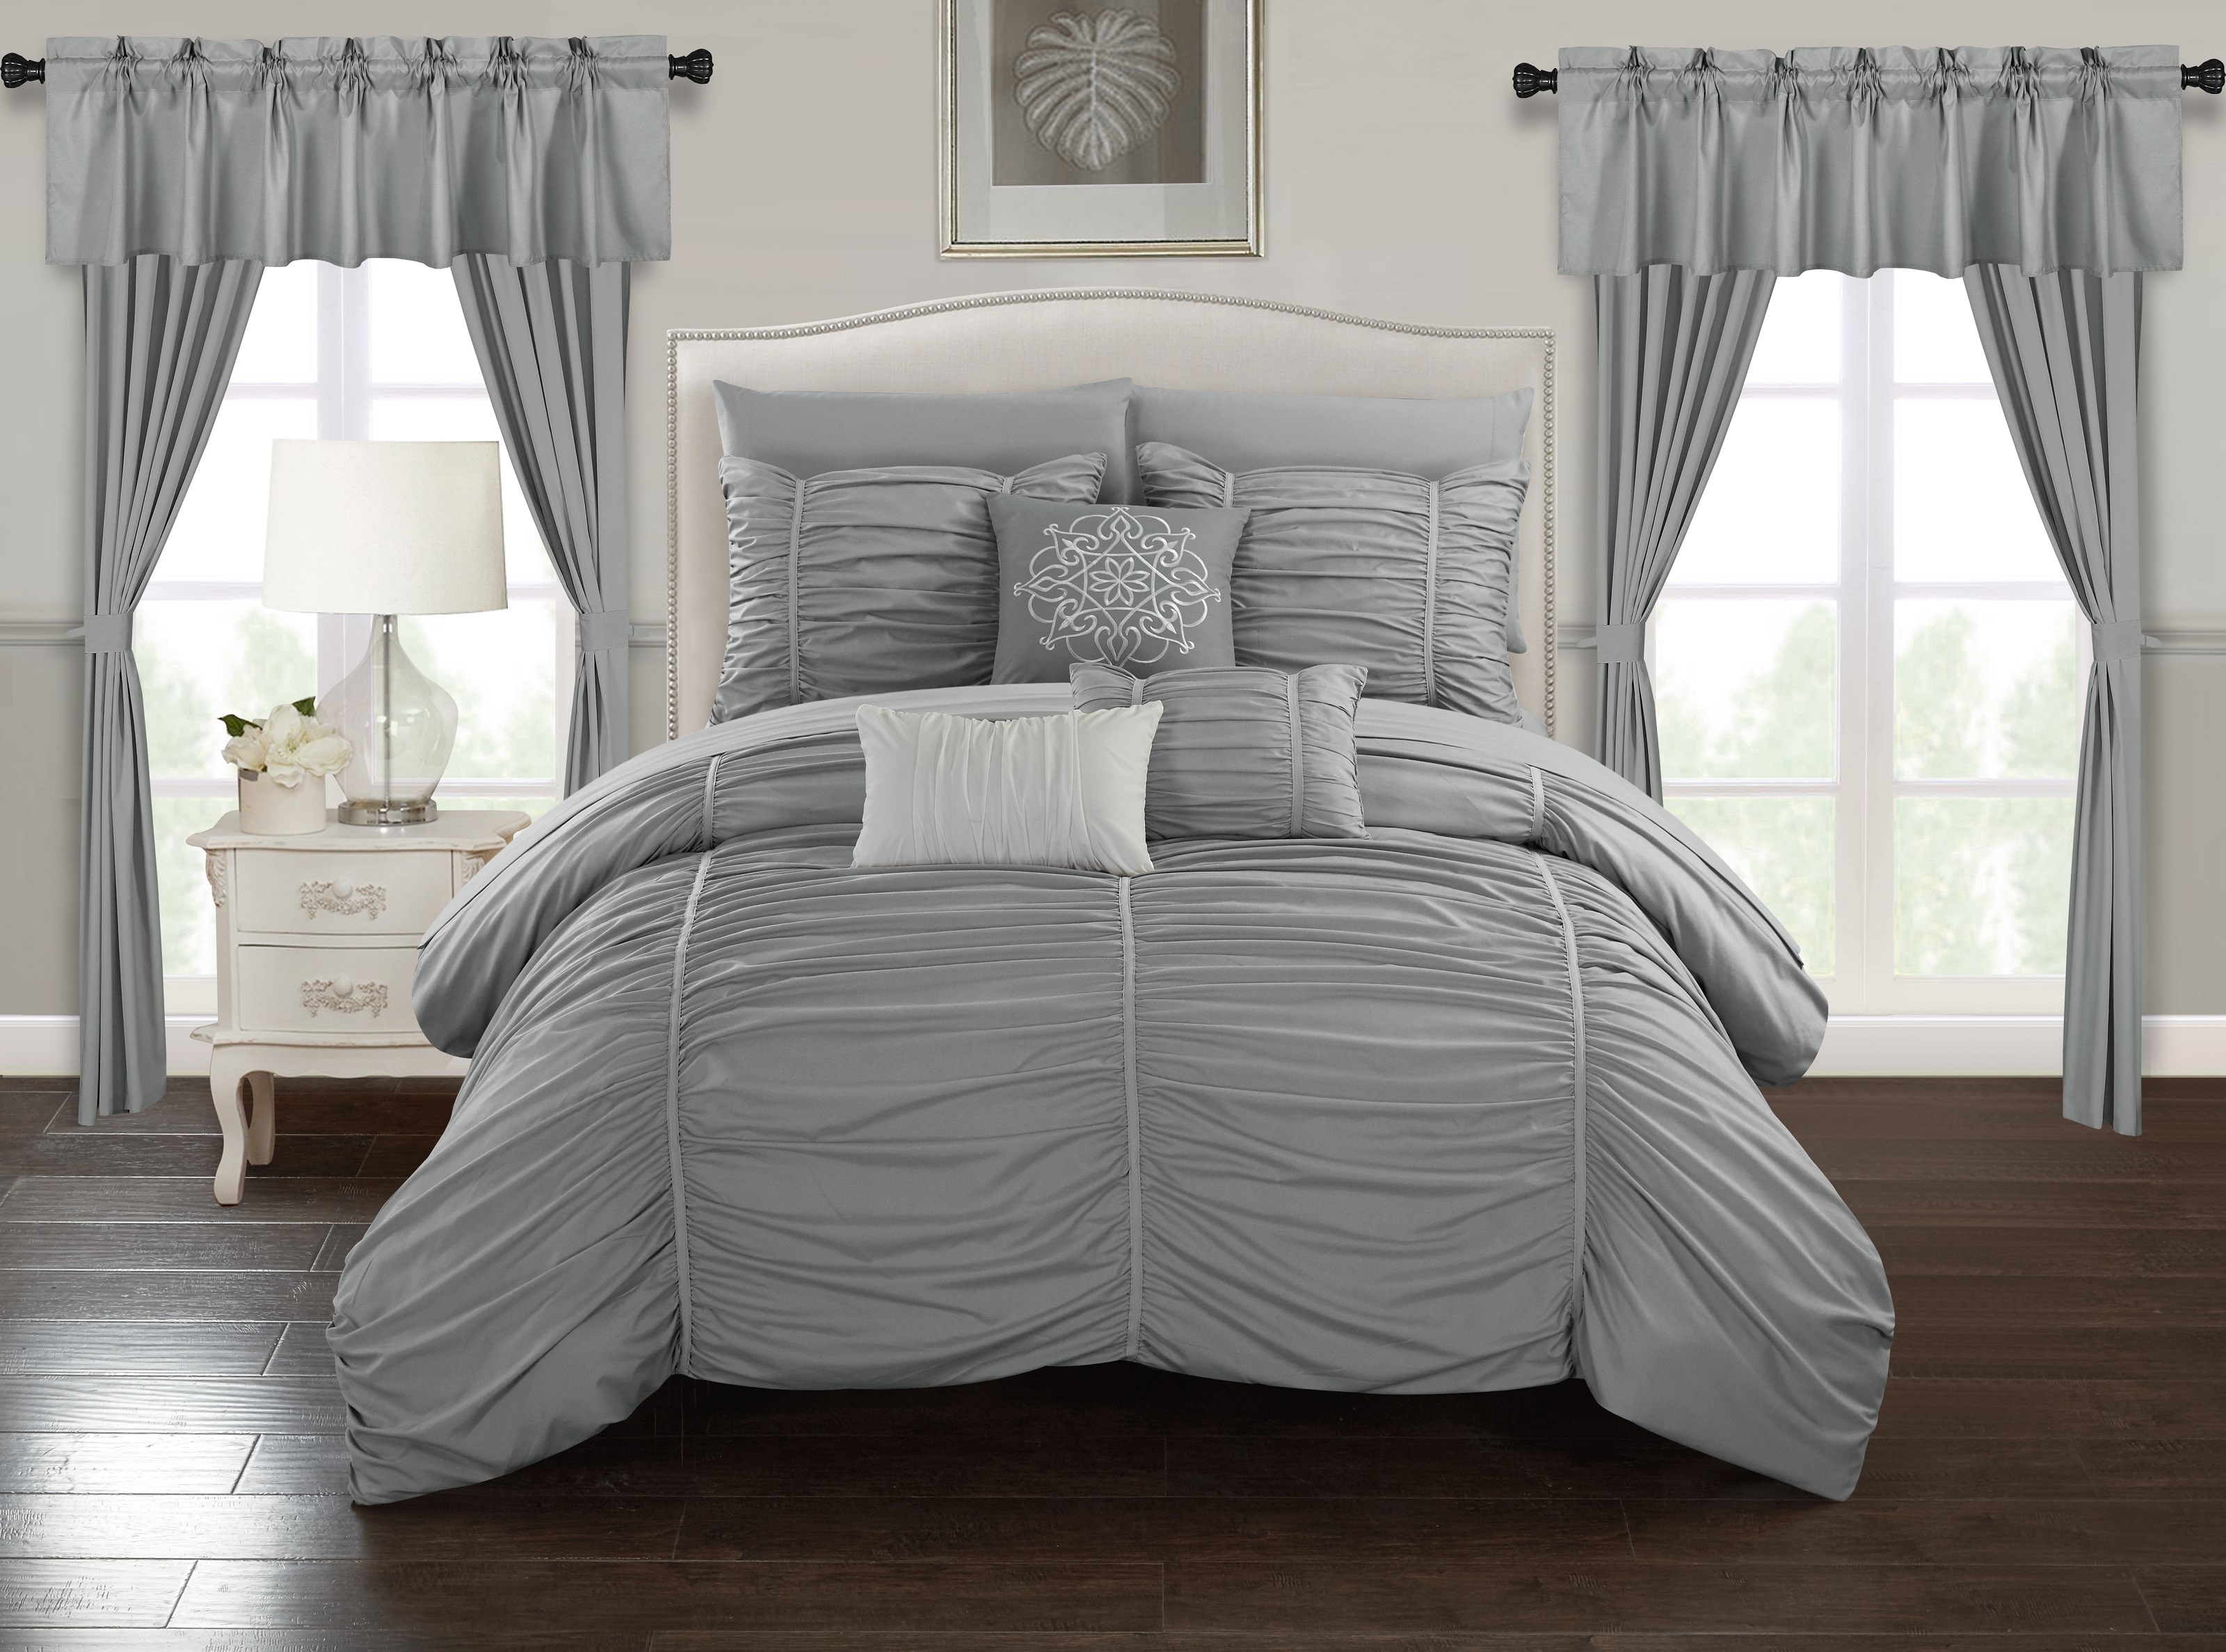 Gruyeres 20 Piece Comforter Set Ruffled Ruched Designer Bedding - Grey, King